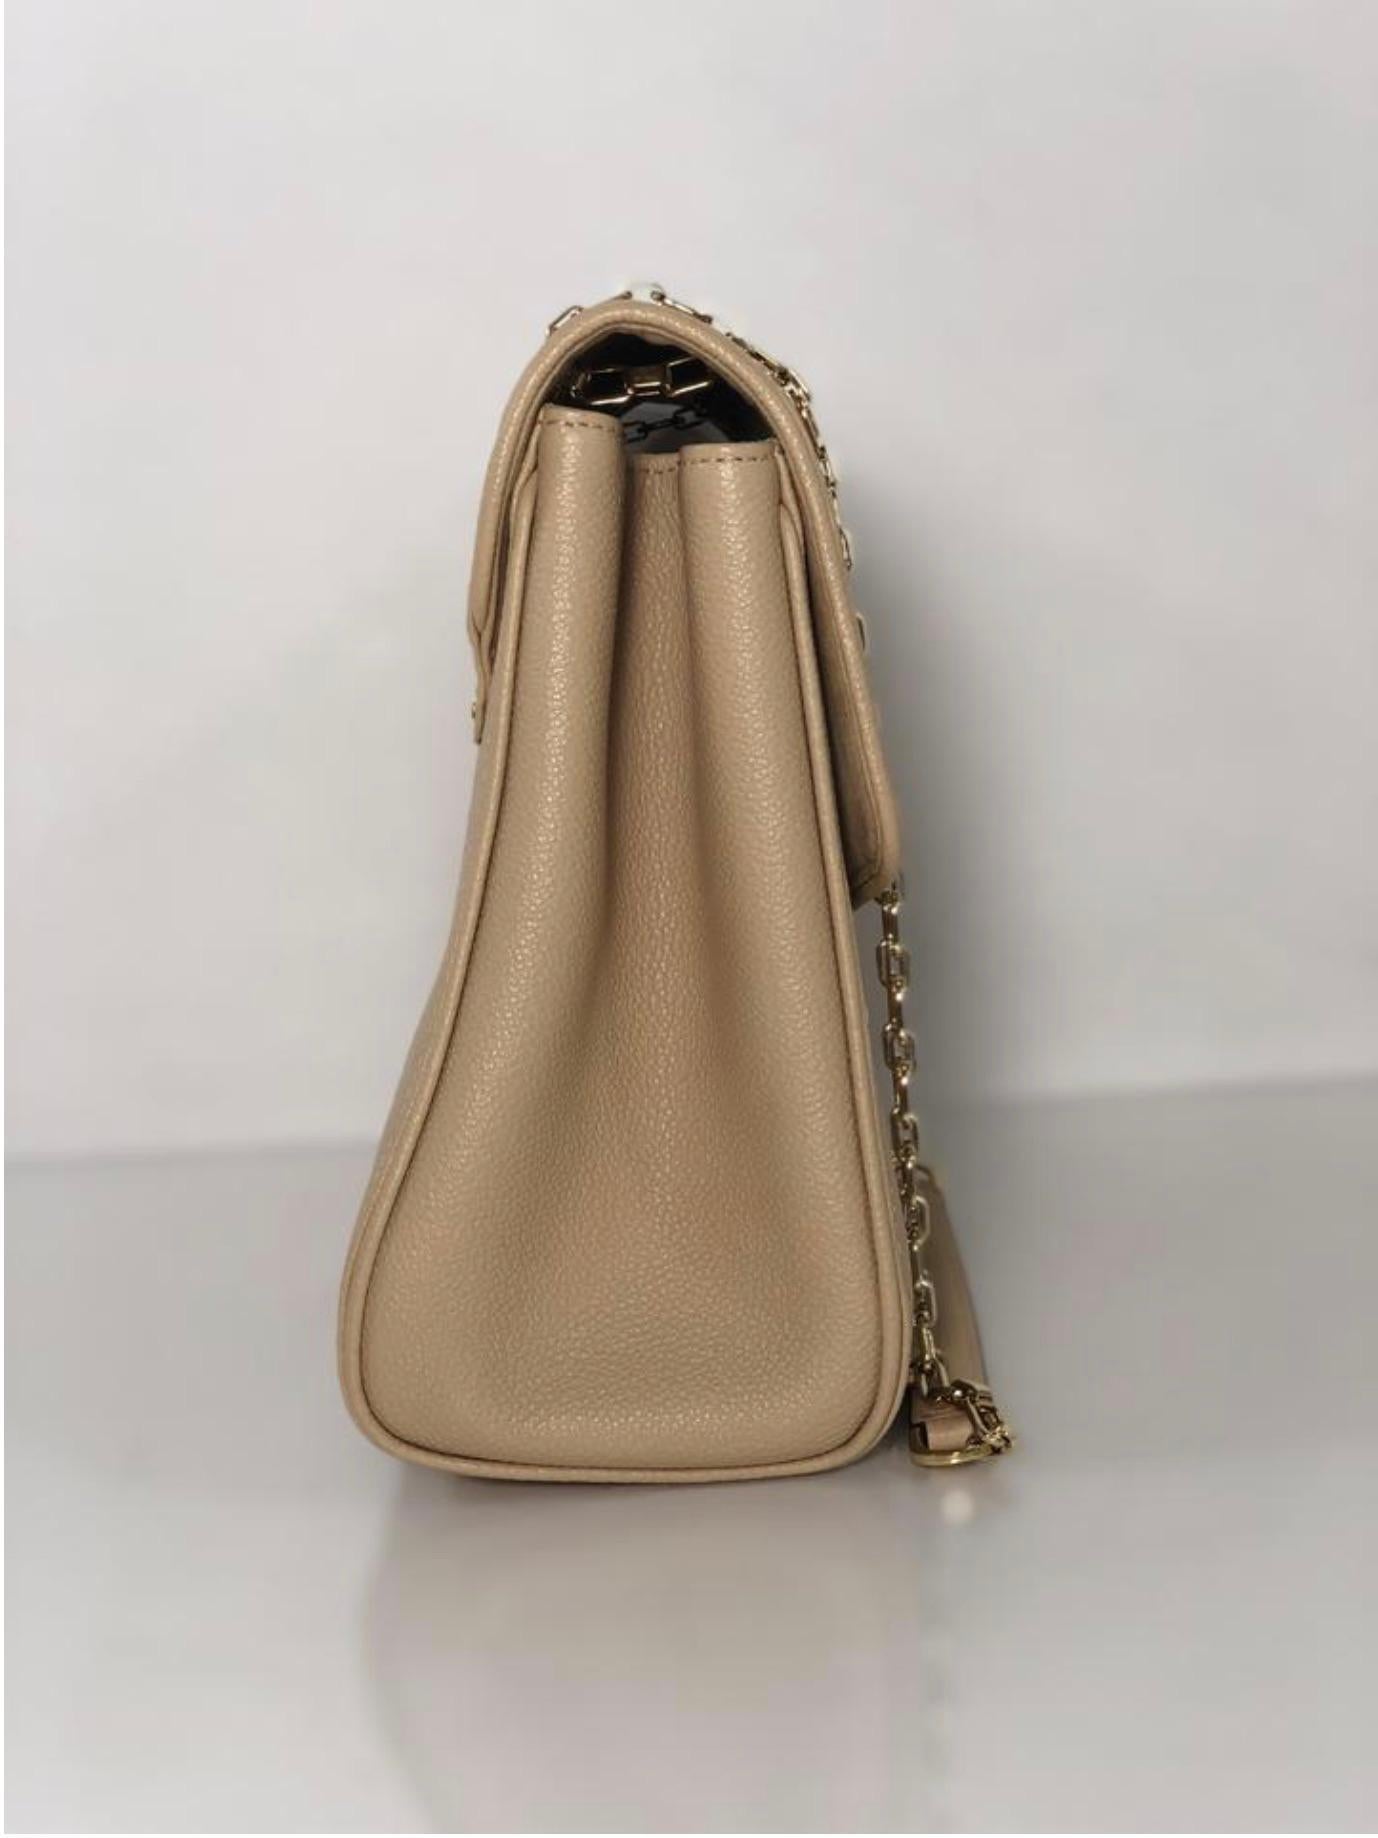 Louis Vuitton Empreinte St Germain MM in Dune Crossbody Shoulder Handbag In Excellent Condition For Sale In Saint Charles, IL